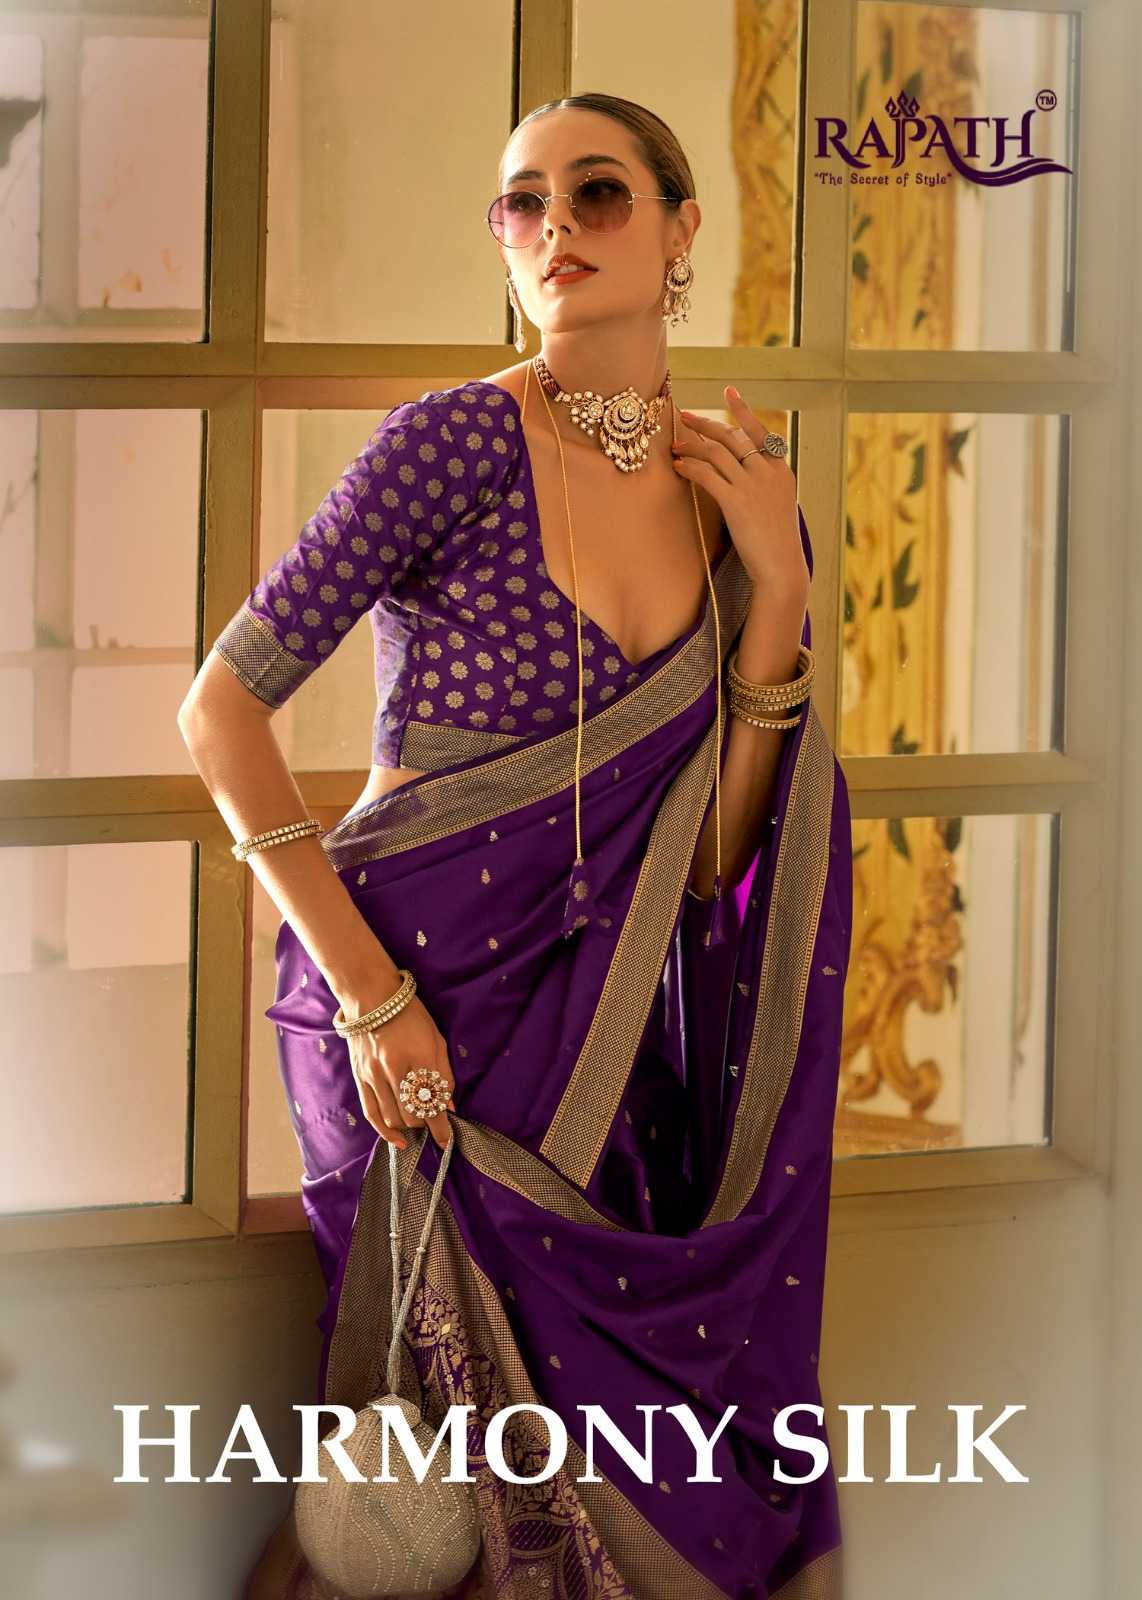 rajpath harmony silk beautiful saree with pure sattin collection 